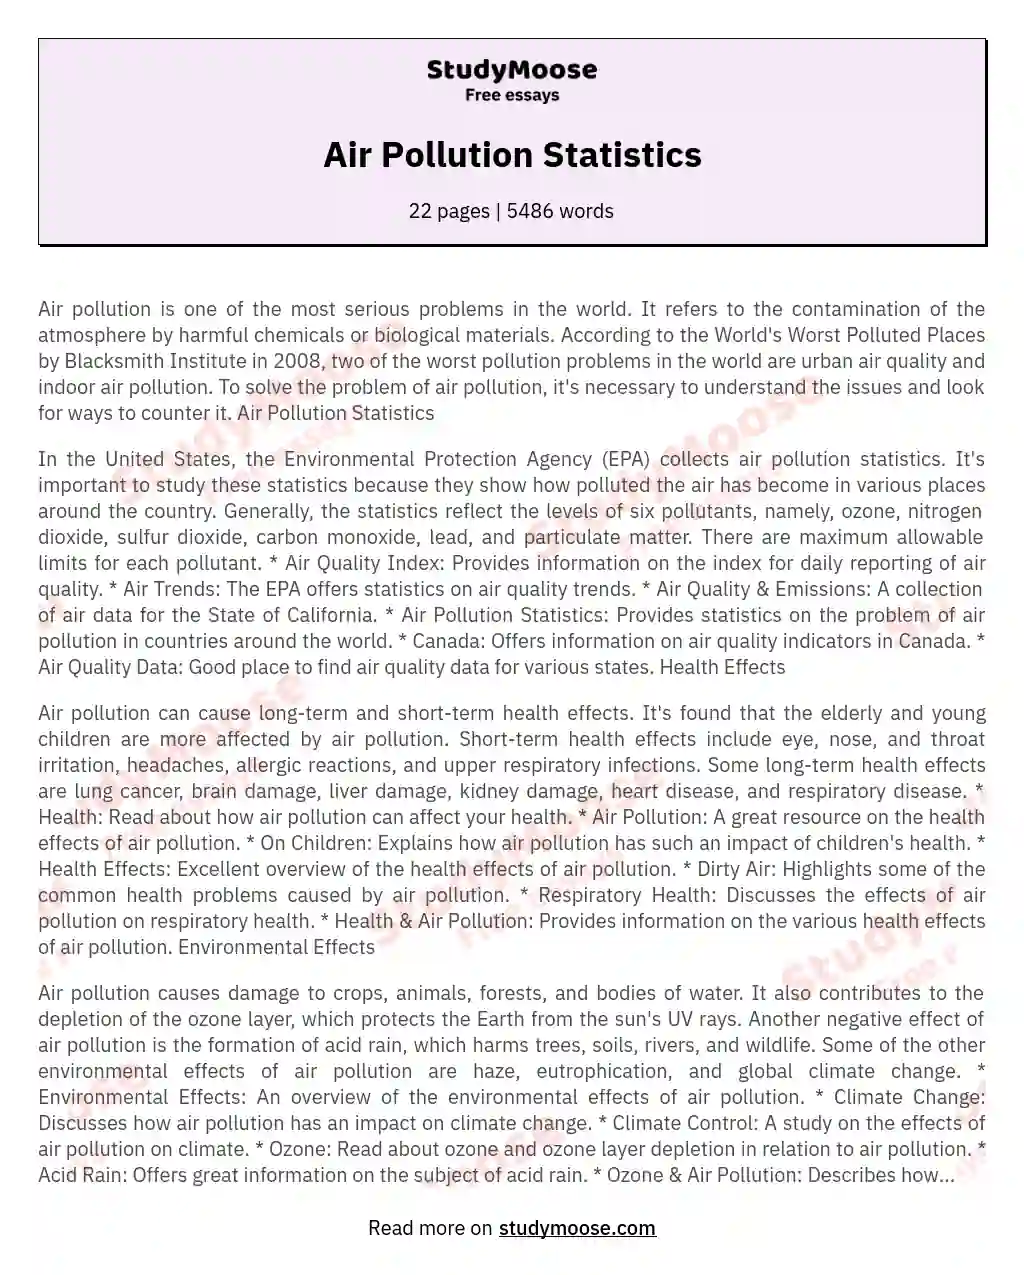 Air Pollution Statistics essay